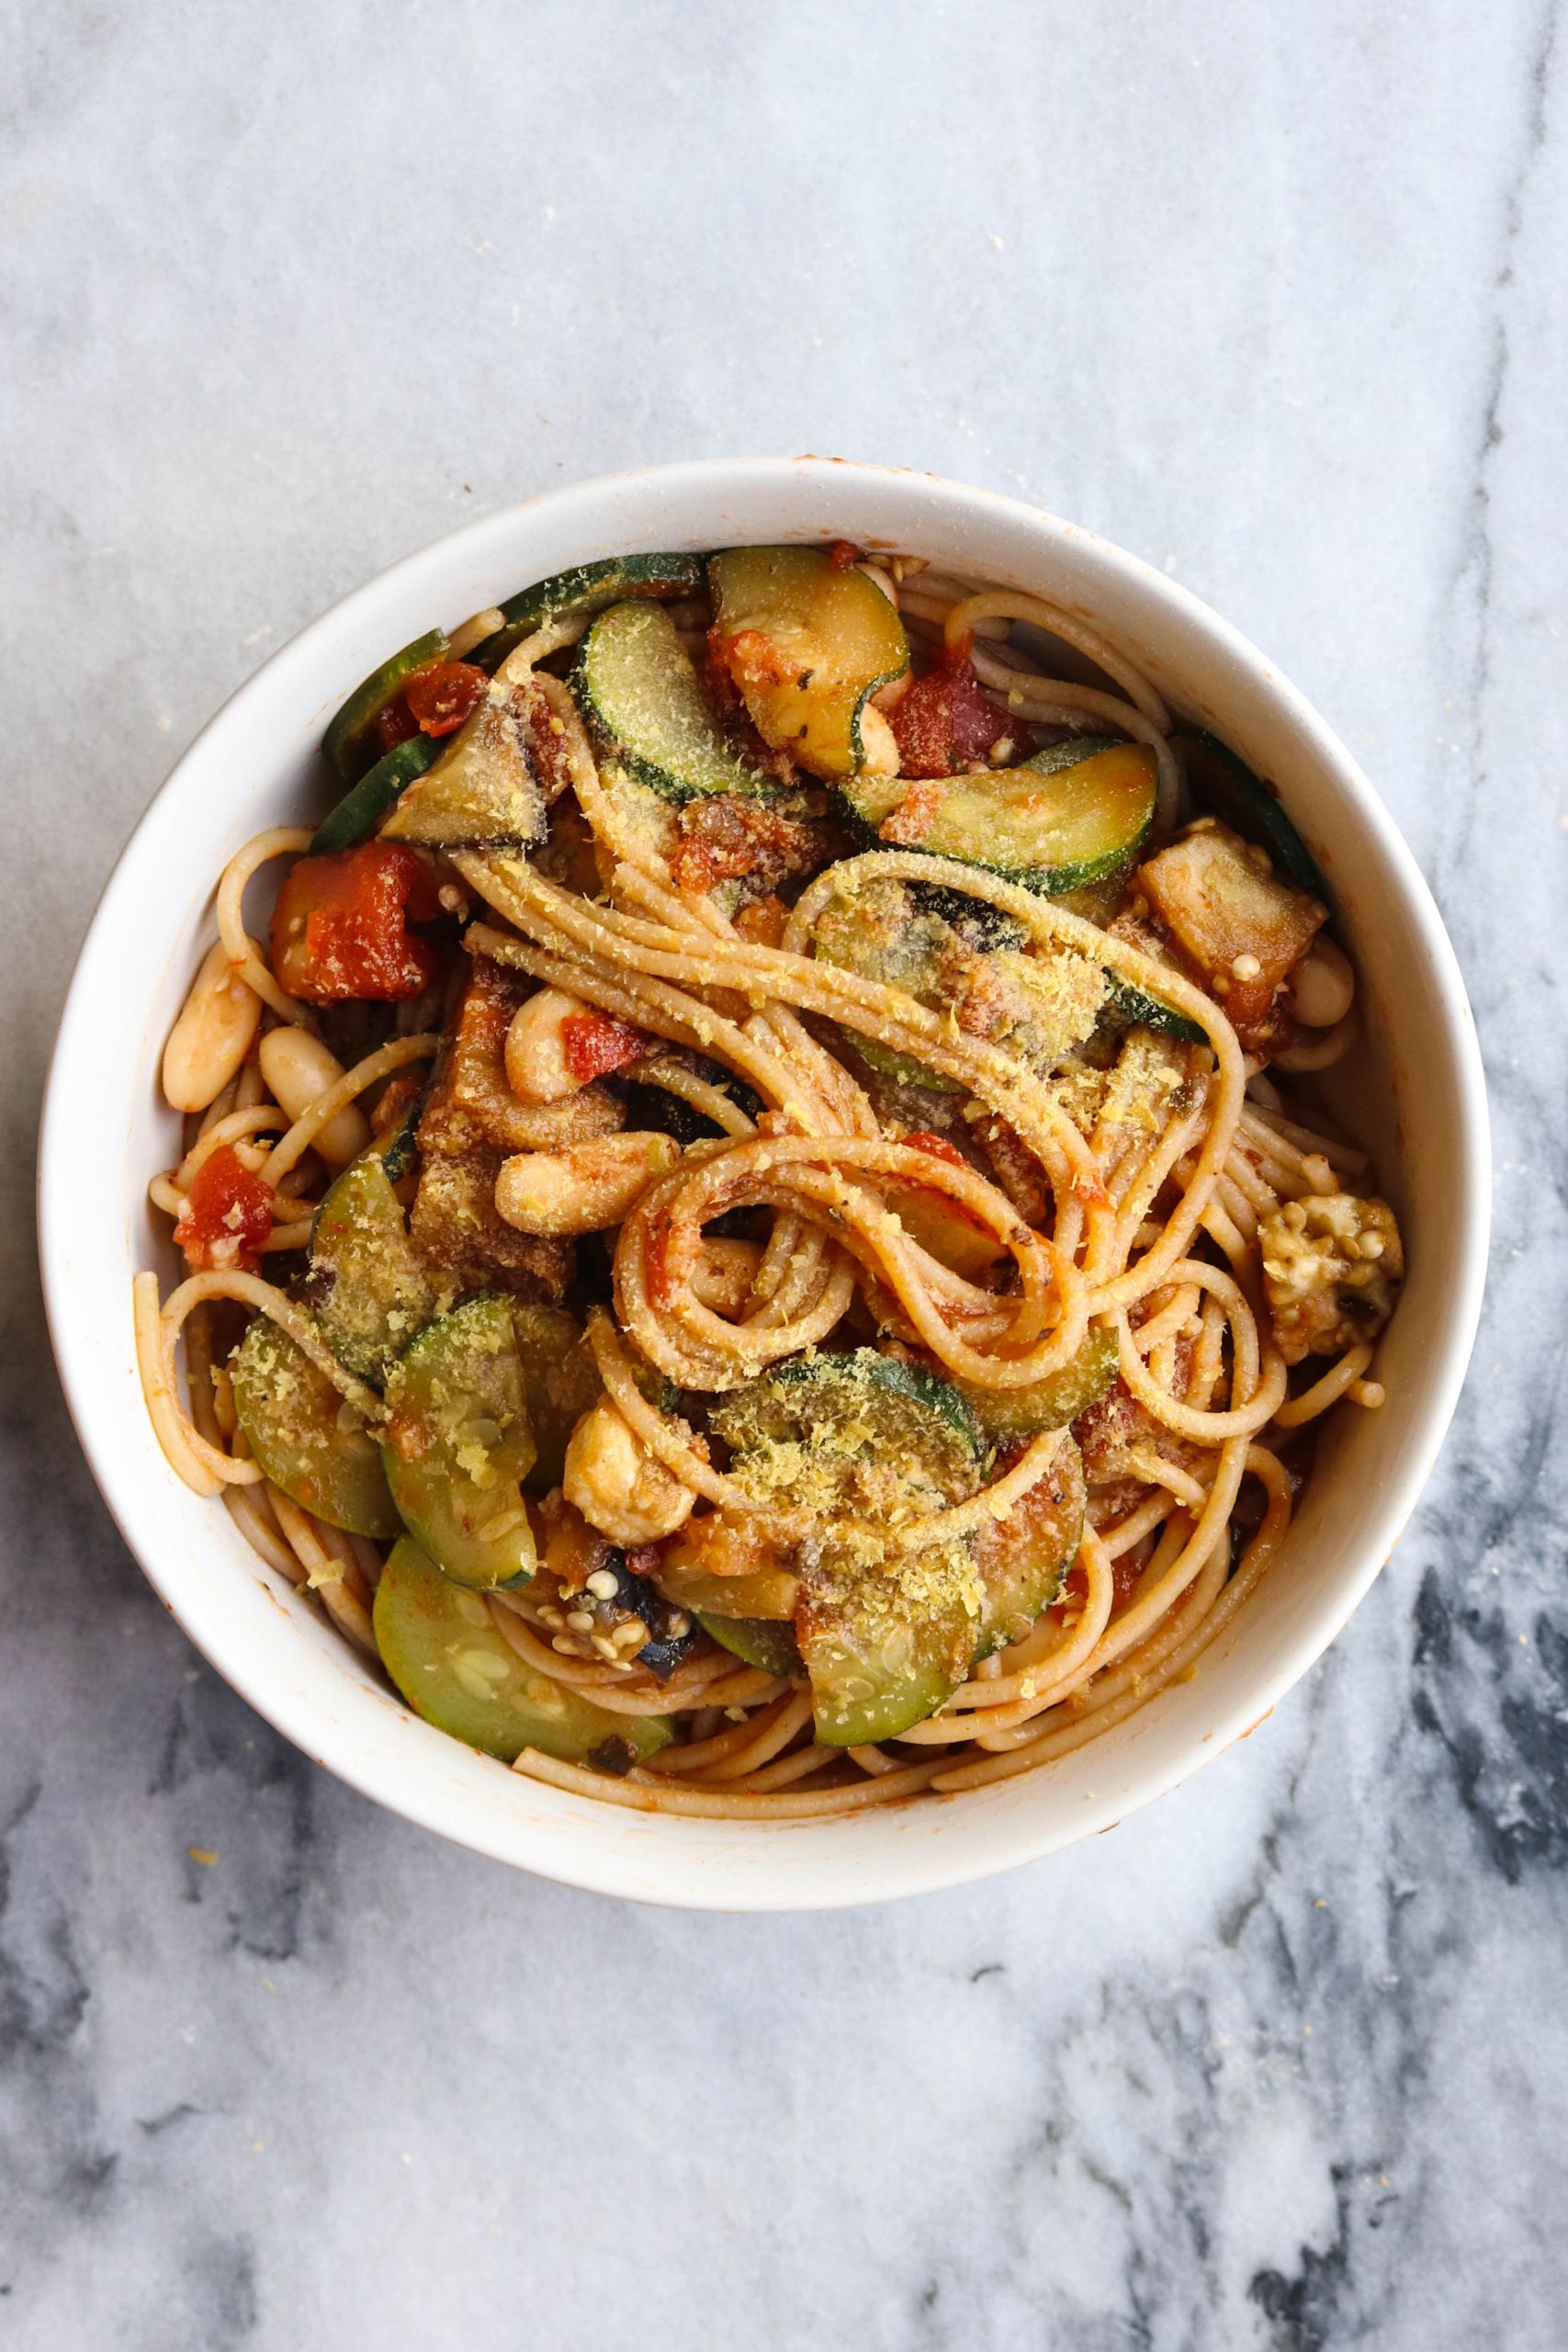 Italian Vegan Recipes
 5 Italian Inspired Vegan Meals for Under $3 From My Bowl